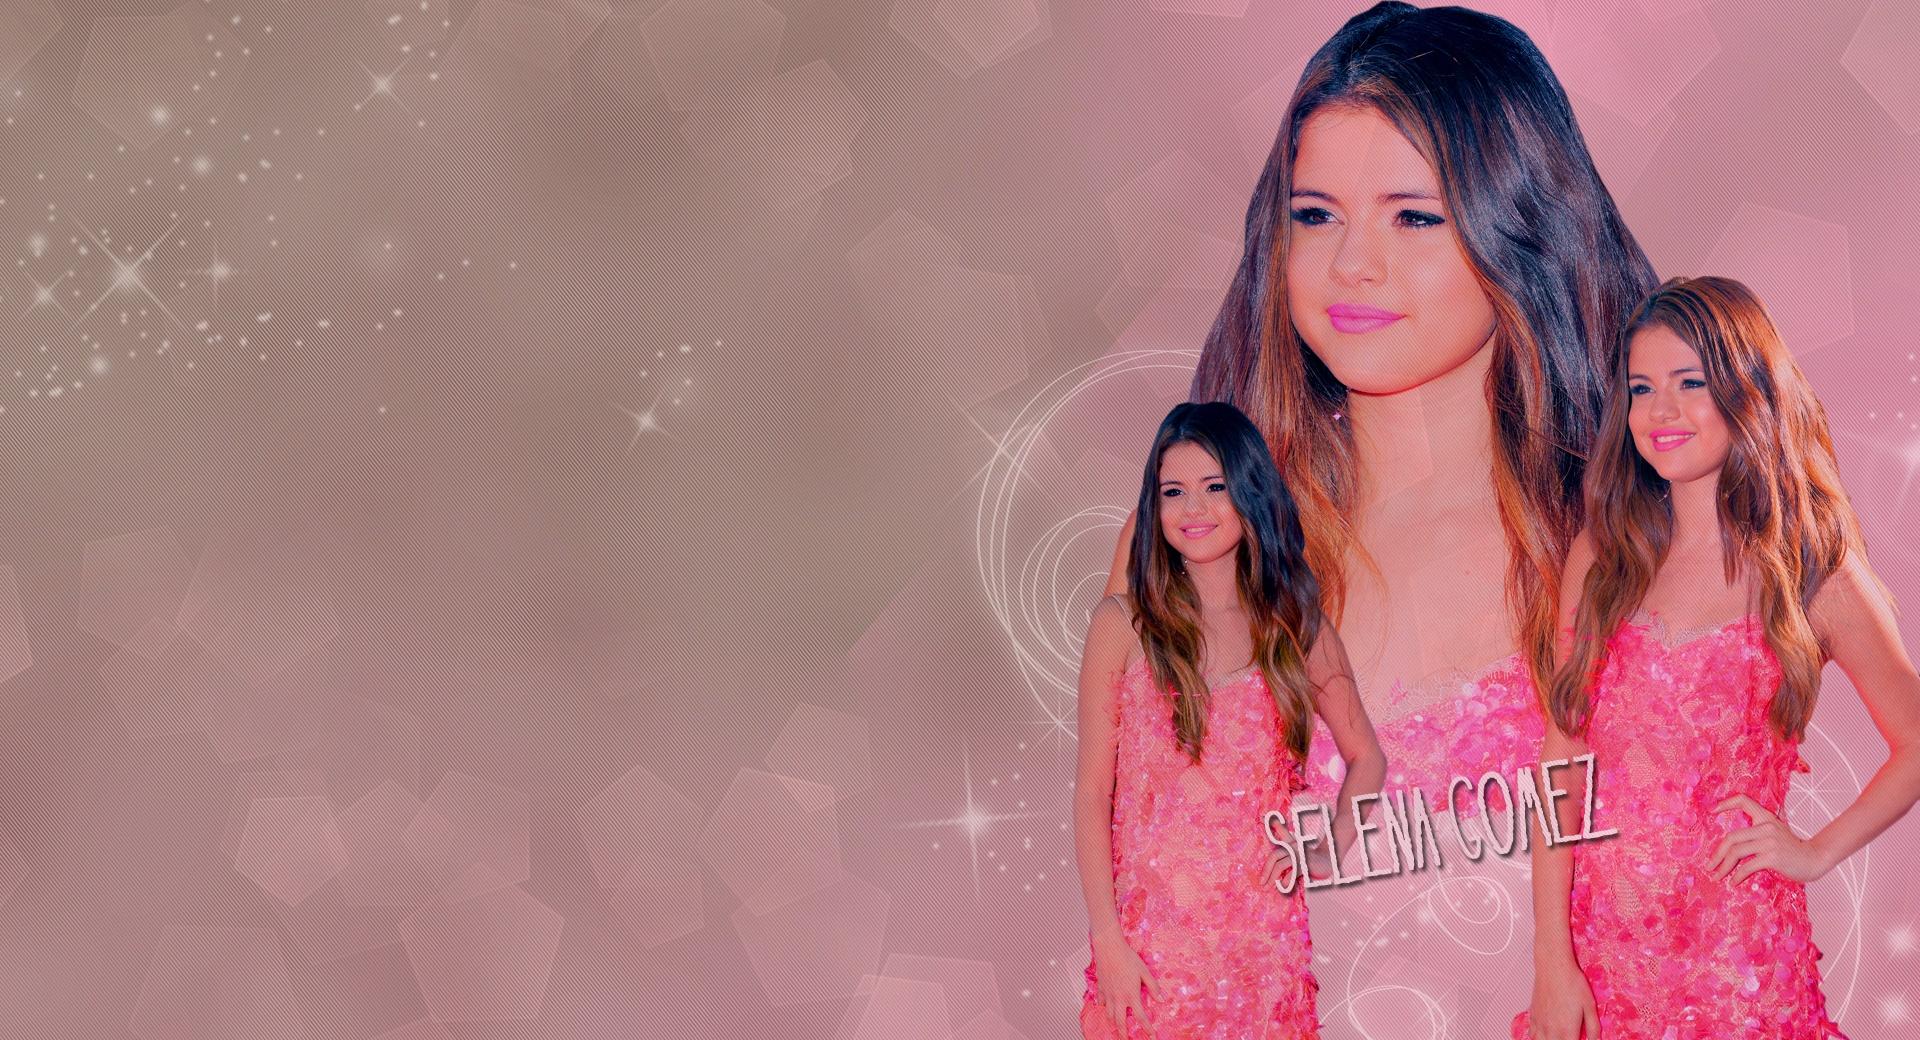 Selena Gomez 2012 Pink Dress at 1024 x 1024 iPad size wallpapers HD quality